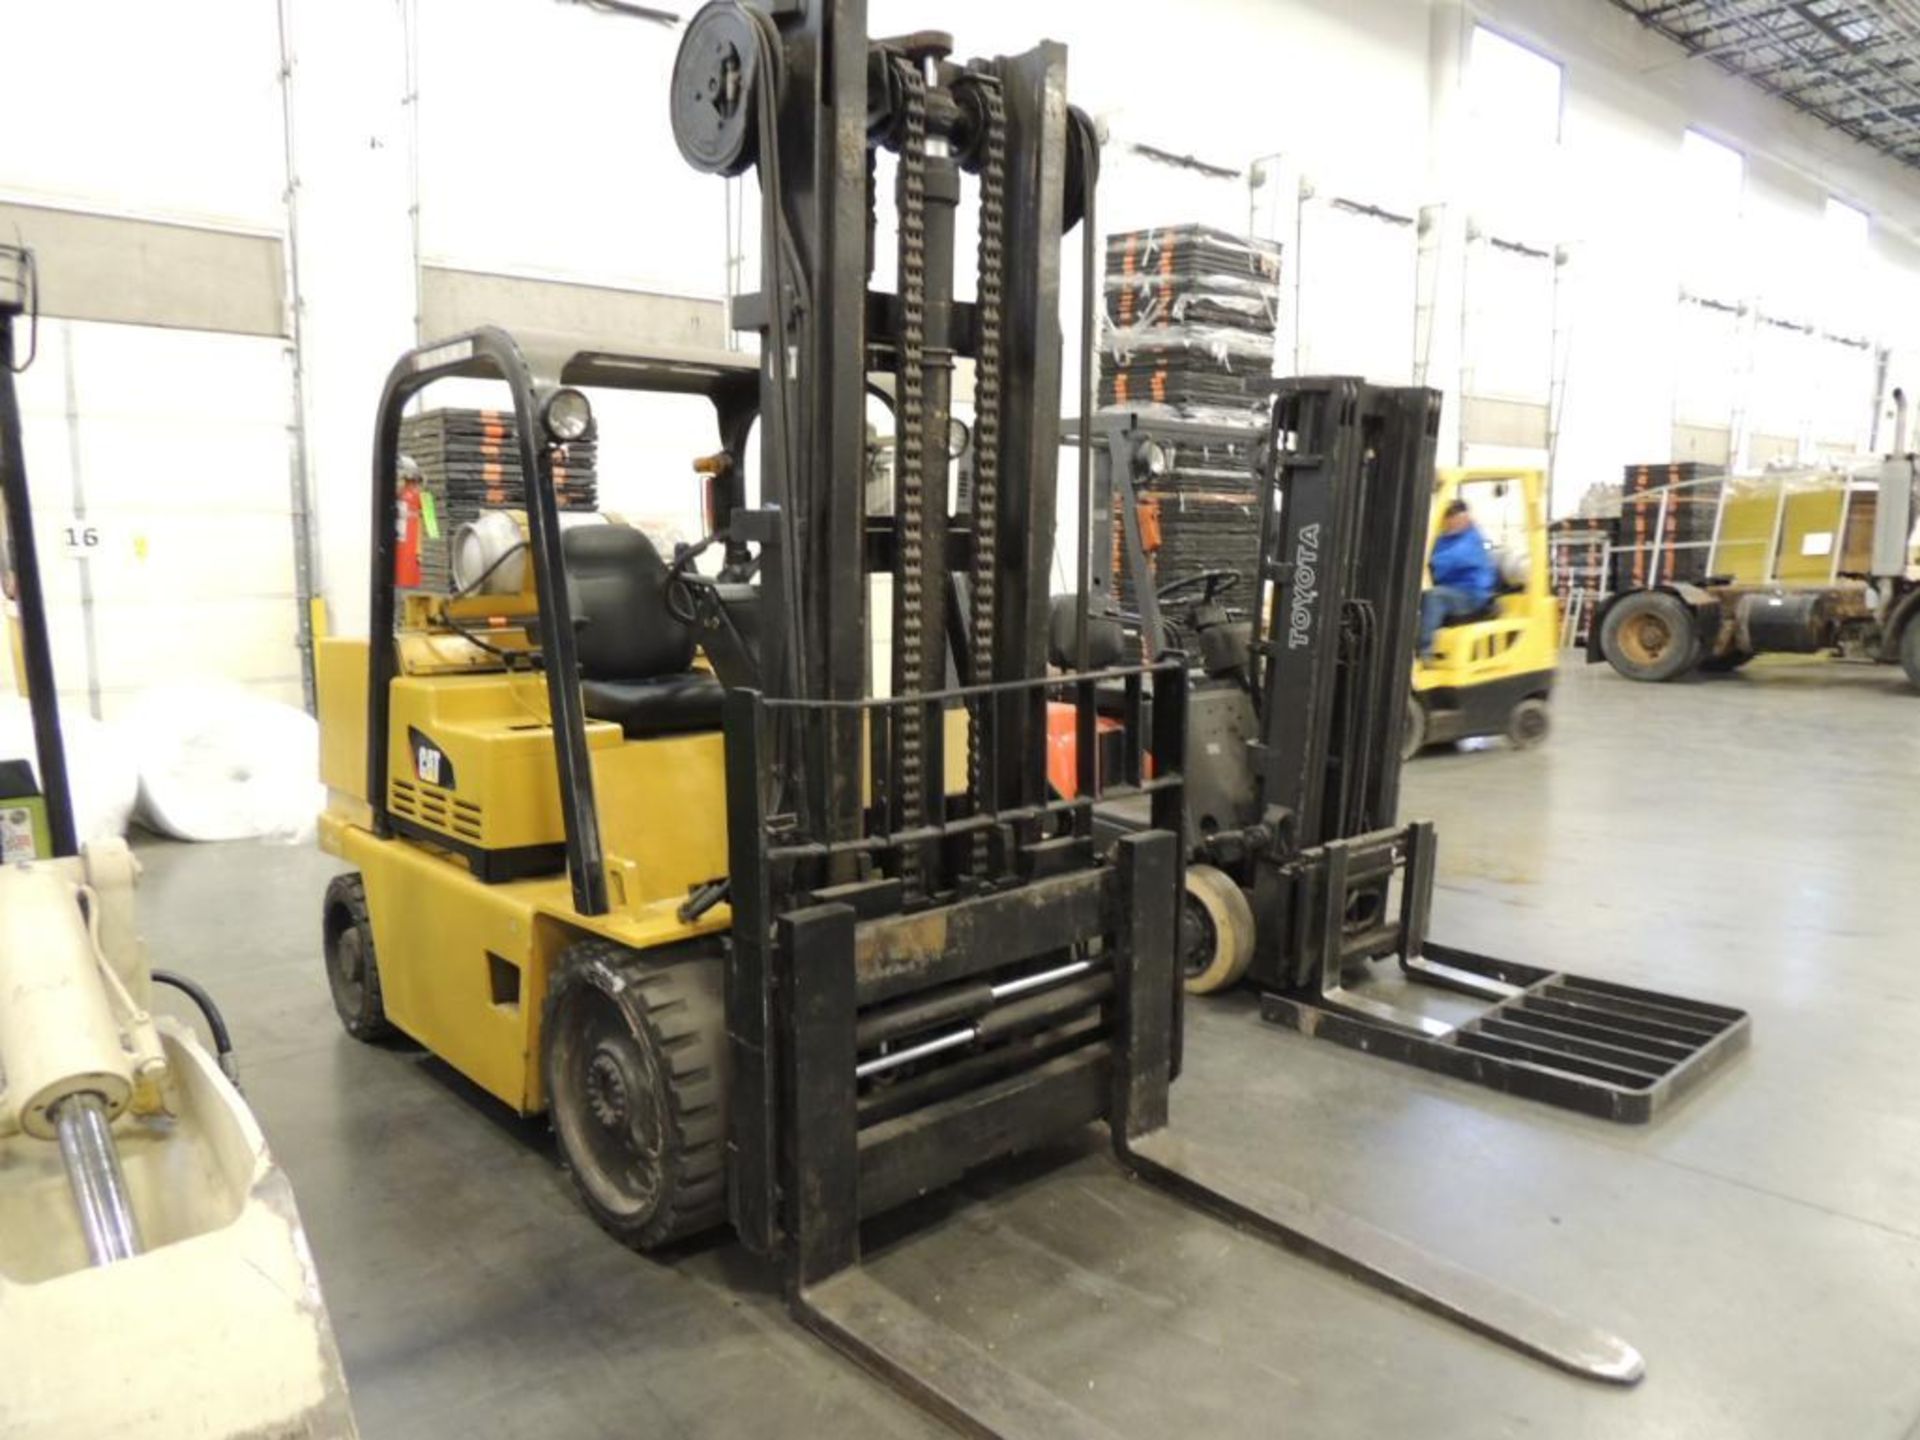 CAT 10,000 lb. Model T1000 LP Forklift, S/N 5MB00671, 201 in. Lift of 2-Stage Mast, Side Shift - Image 2 of 4